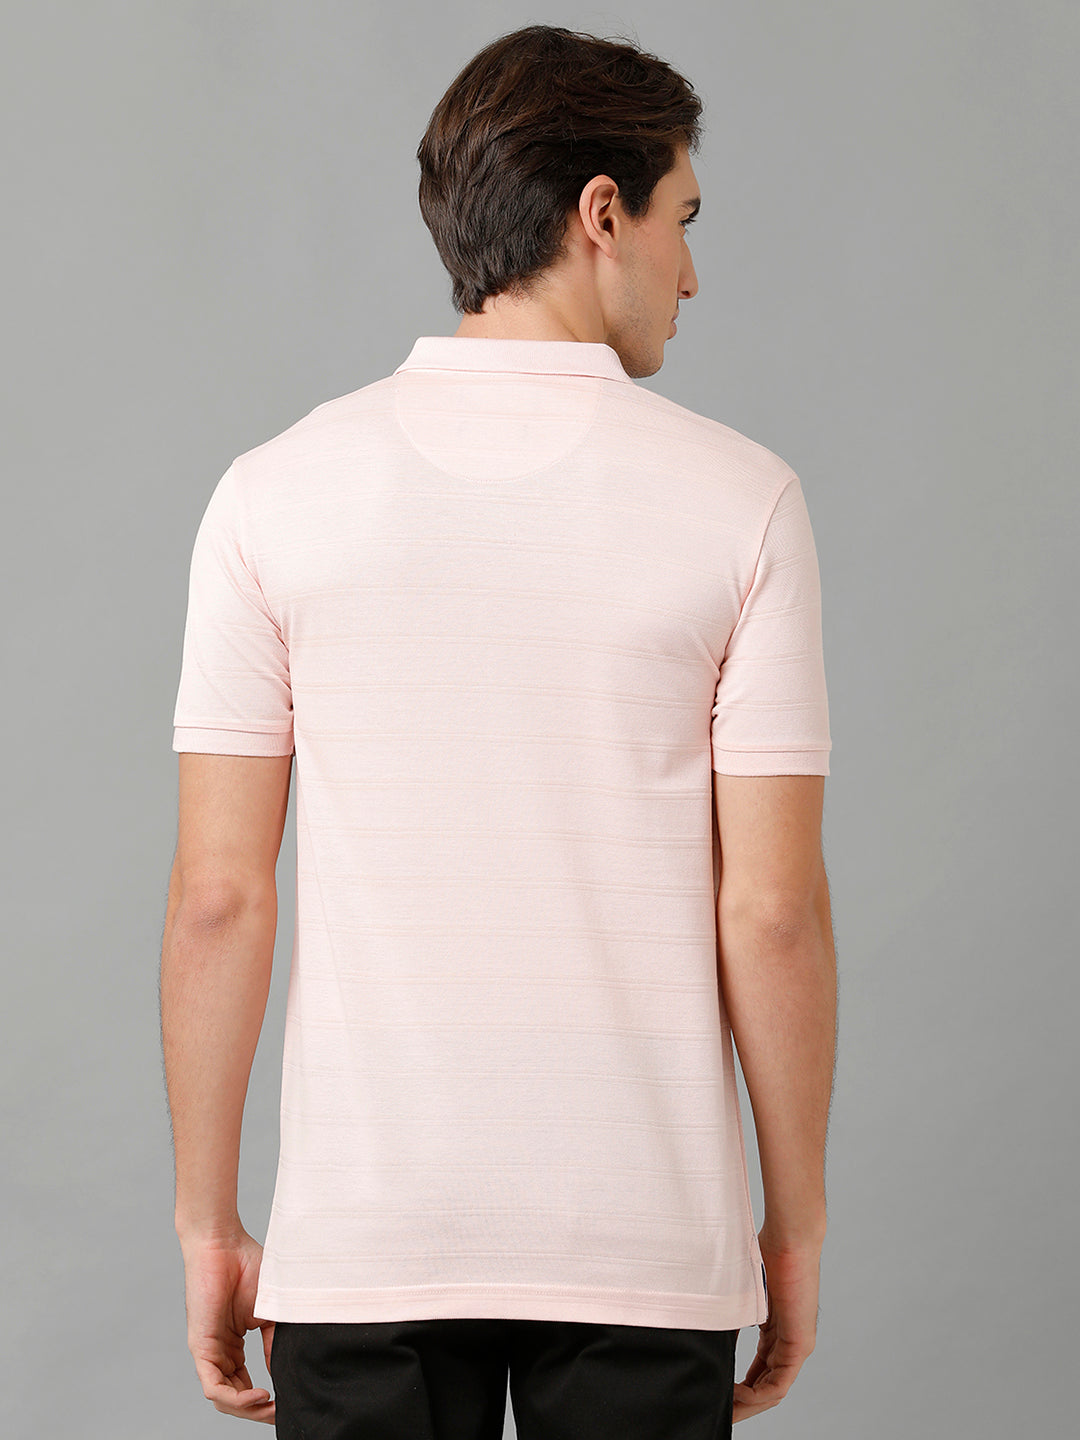 Classic Polo Men's Cotton Striped Half Sleeve Slim Fit Polo Neck Cream Color T-Shirt | Prm - 753 C